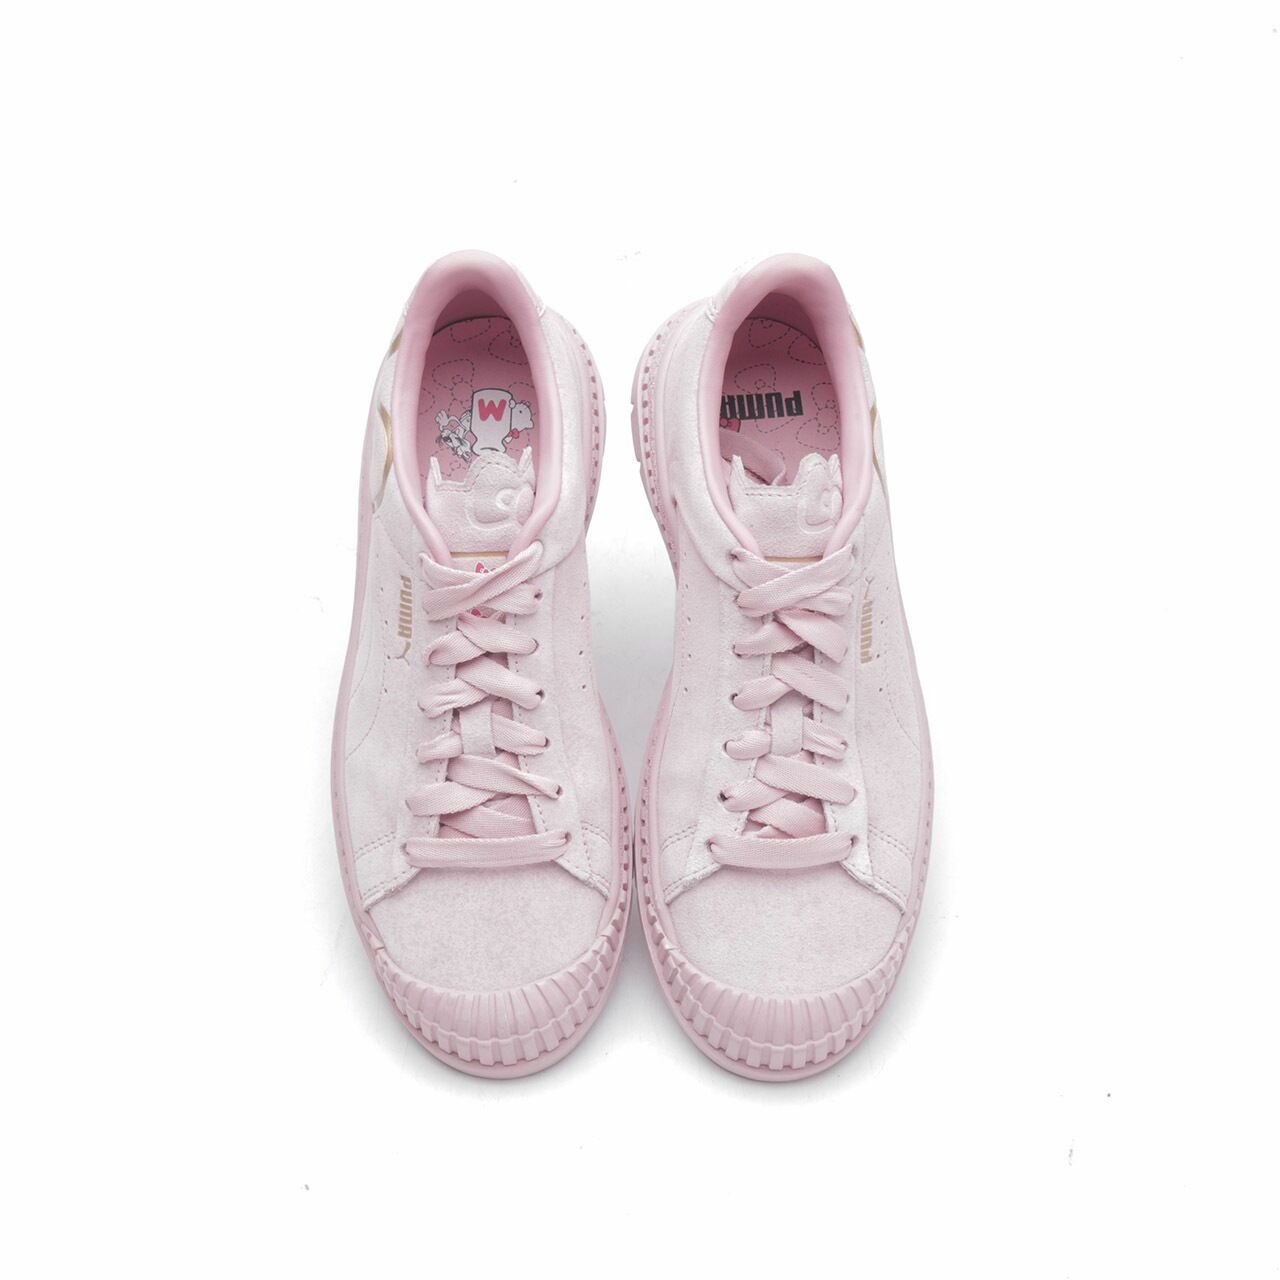 Puma x Hello Kitty Utility Women's Pink Gold Sneakers